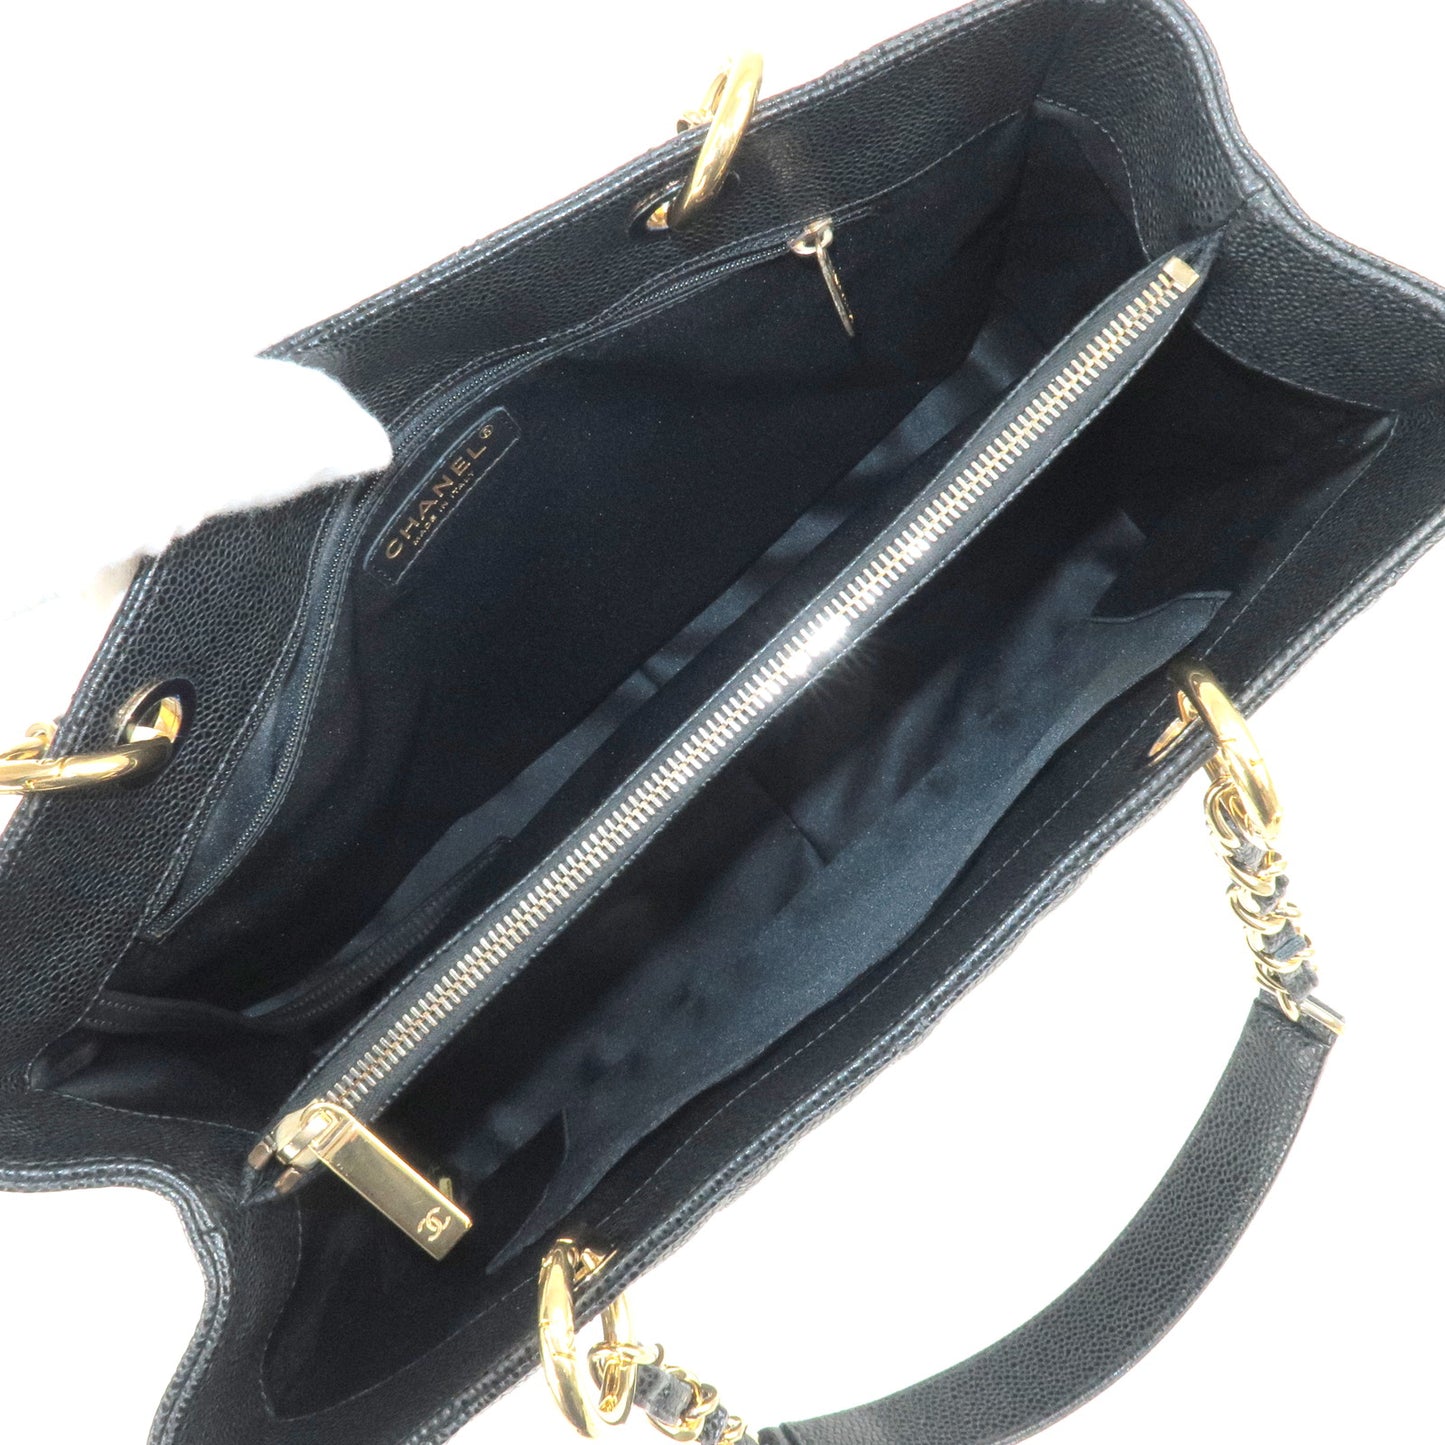 CHANEL Caviar Skin GST Chain Tote Bag Black Gold A50995